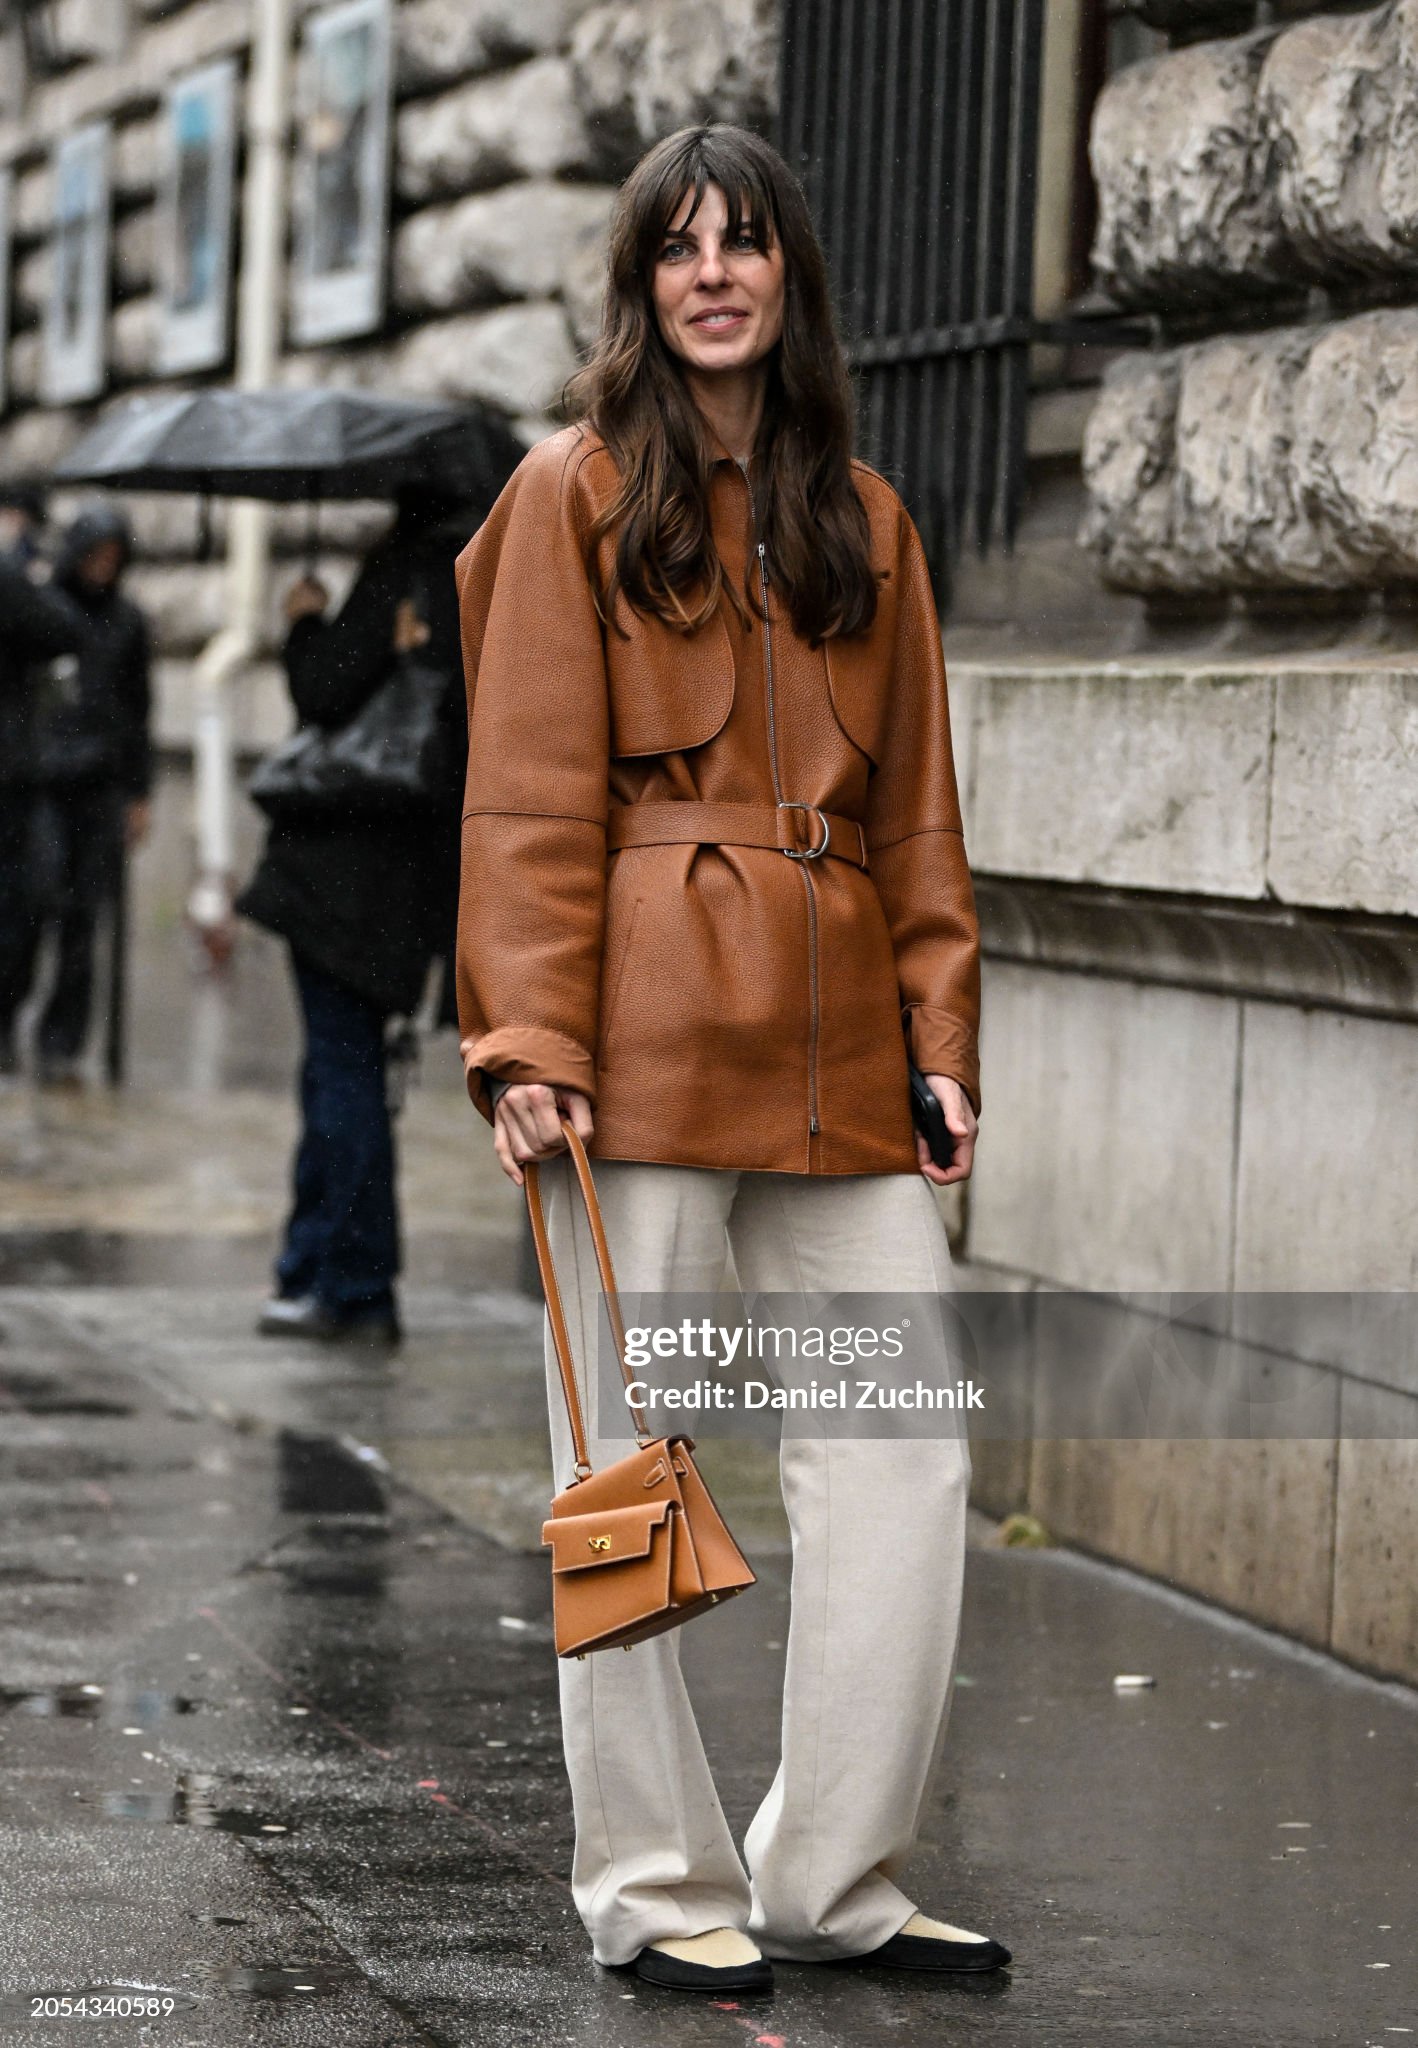 paris-france-laura-roso-vidrequin-is-seen-wearing-a-brown-hermes-coat-cream-pants-black-flats.jpg